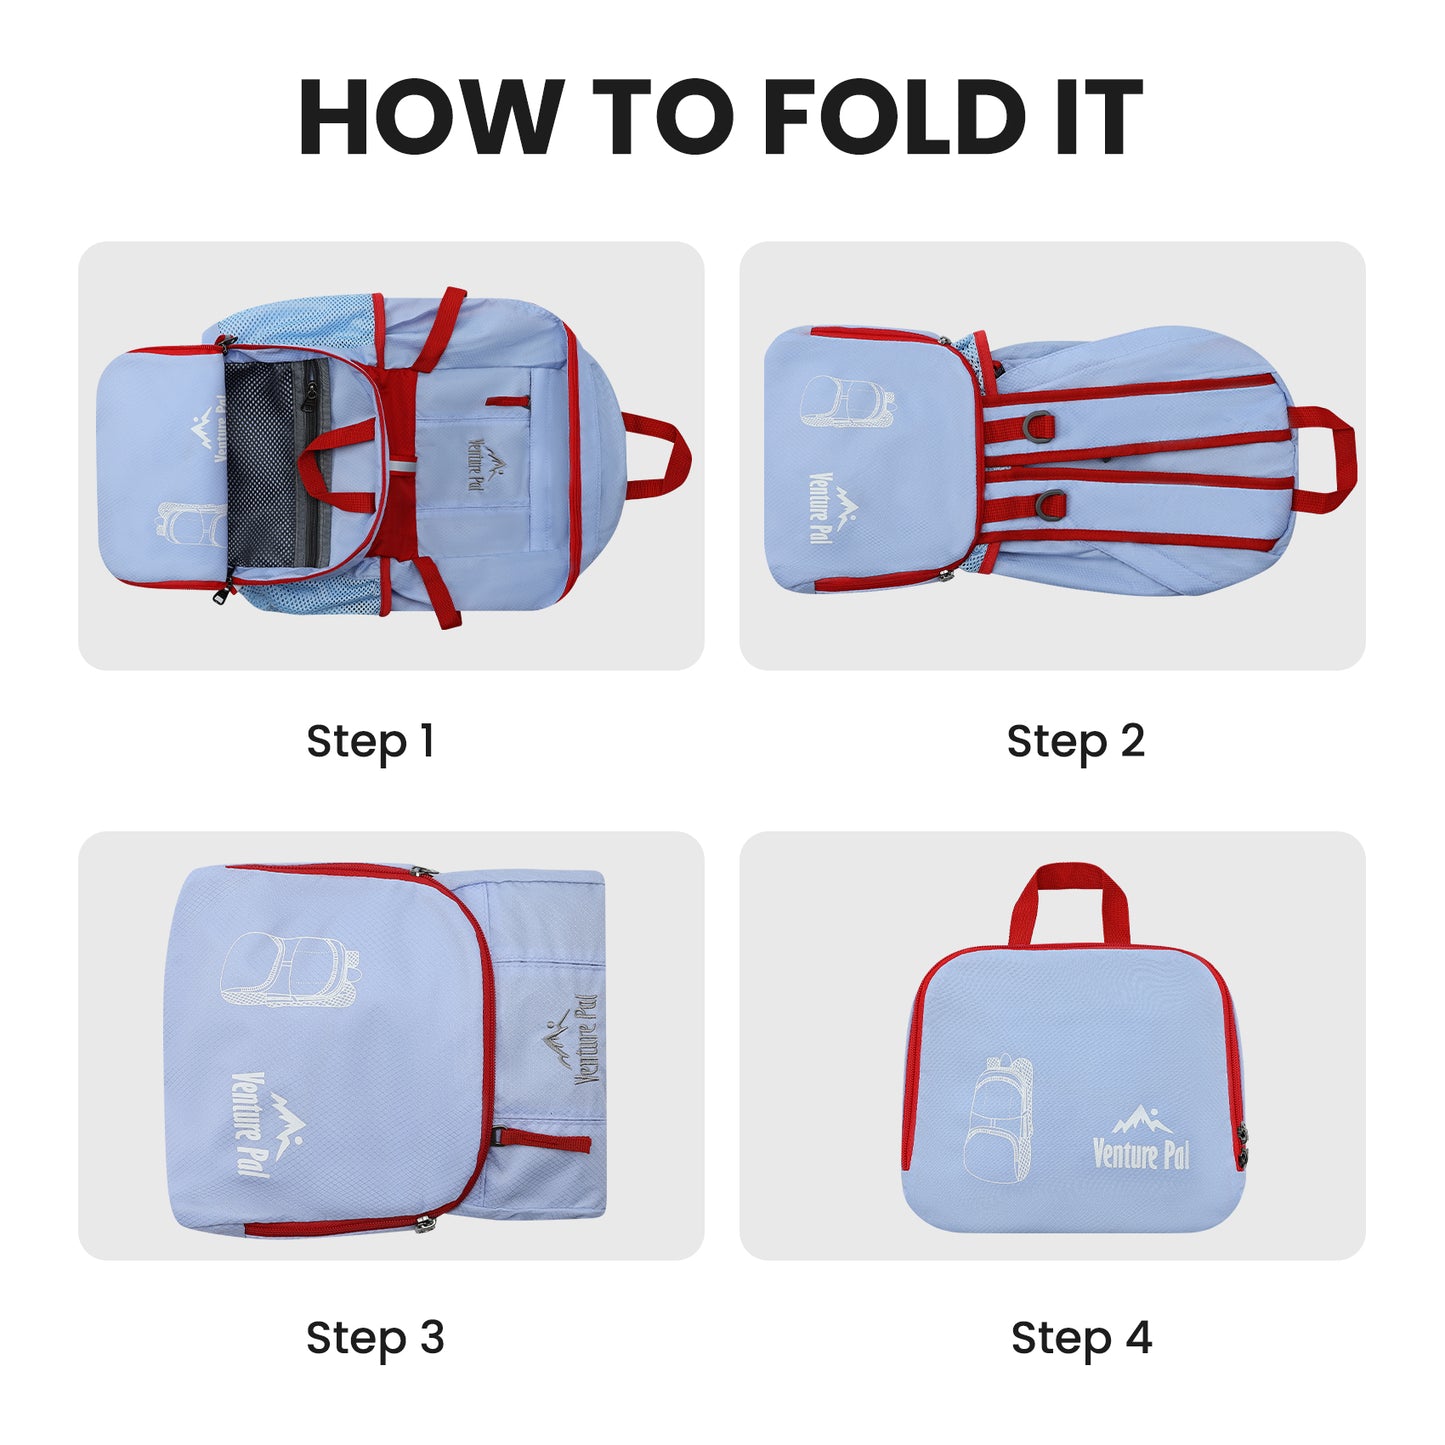 Venture Pal Red/Grey Blue 35L Double-Layer Bottom & Shoulder Straps Sports Backpack